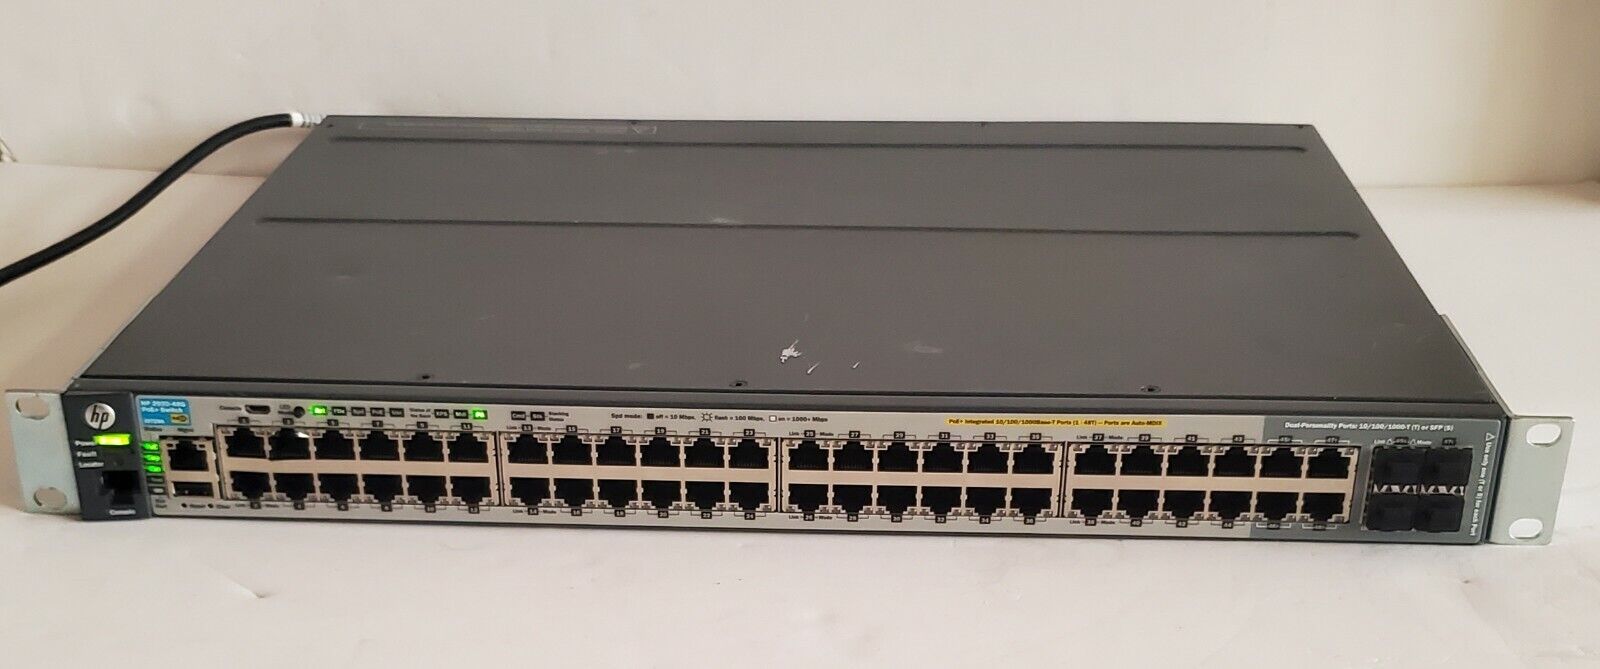 HP J9729A - 2920-48G-POE+ 48 Port PoE+ Switch